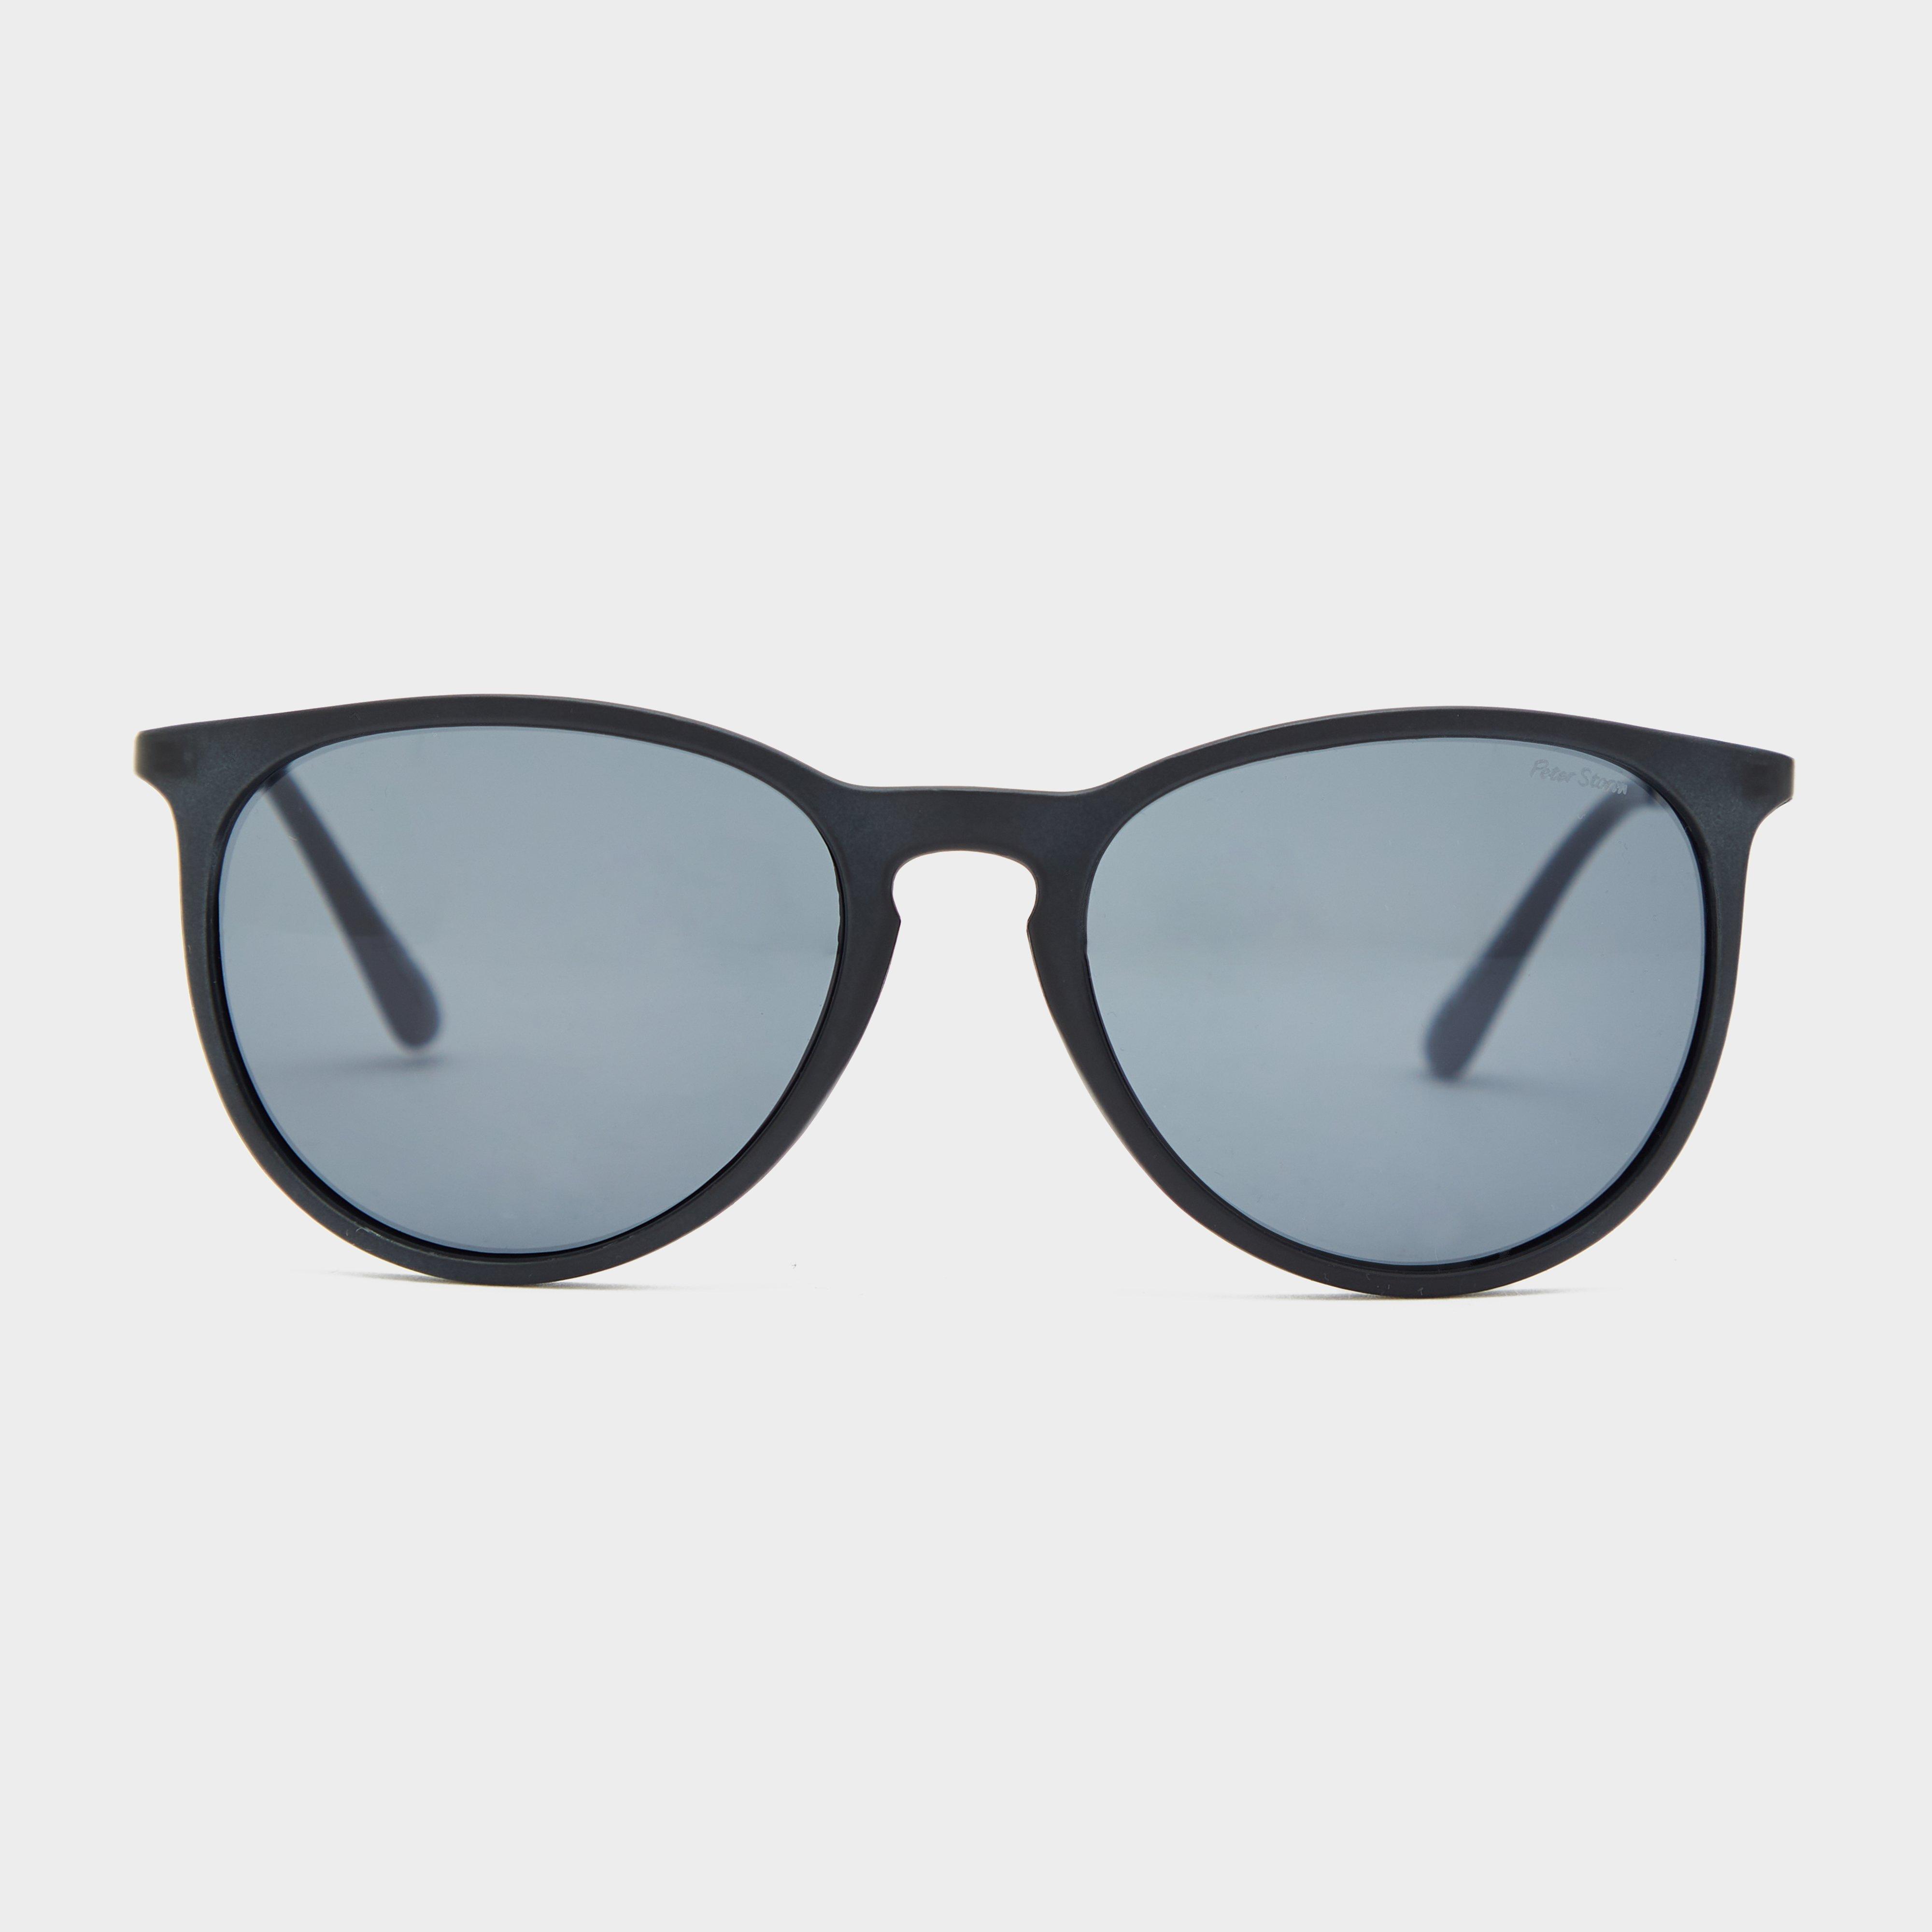 Image of Peter Storm Cromer Sunglasses - Blk, BLK